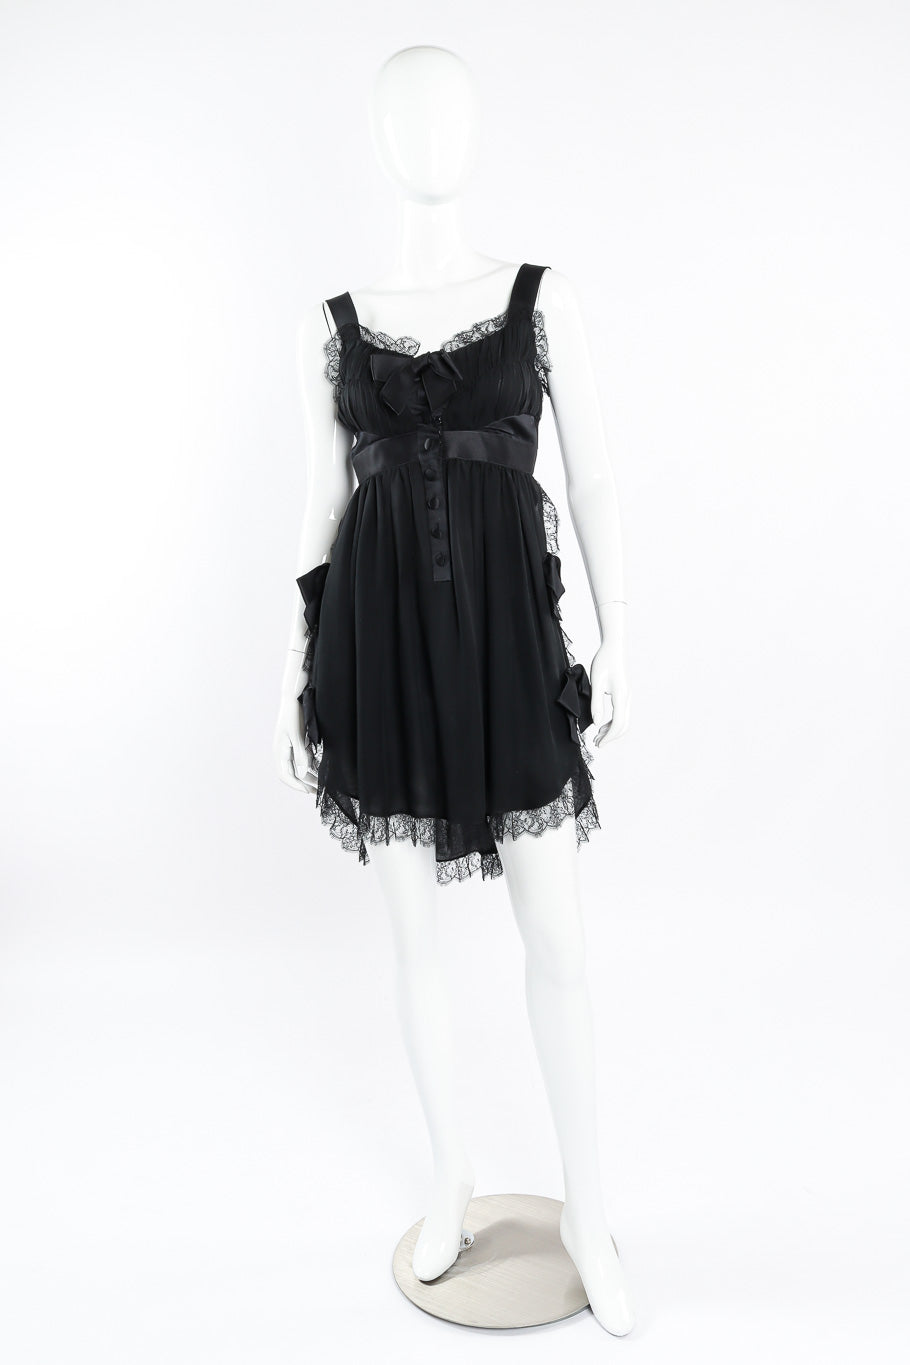 Mini dress by Chanel on mannequin @recessla